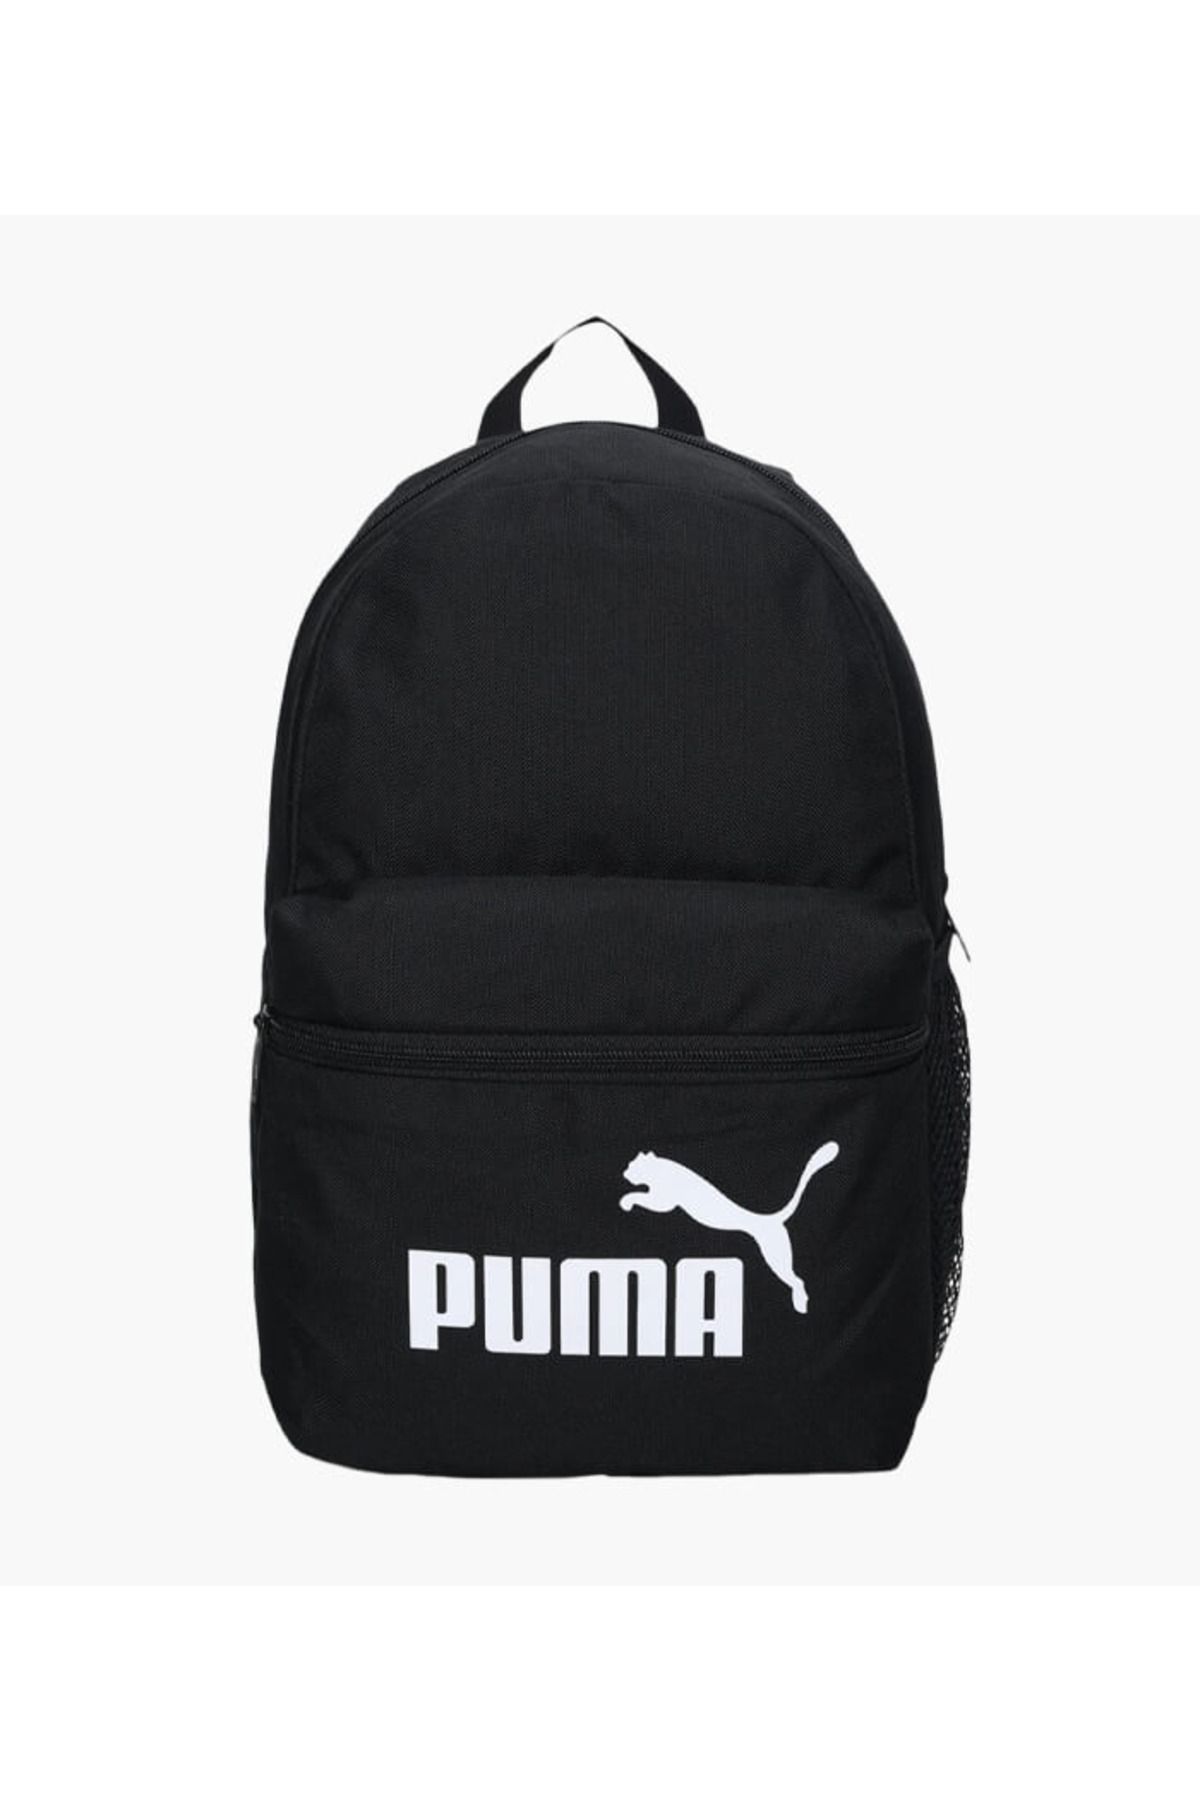 Puma Phase Small Backpack Unisex Sırt Çantası